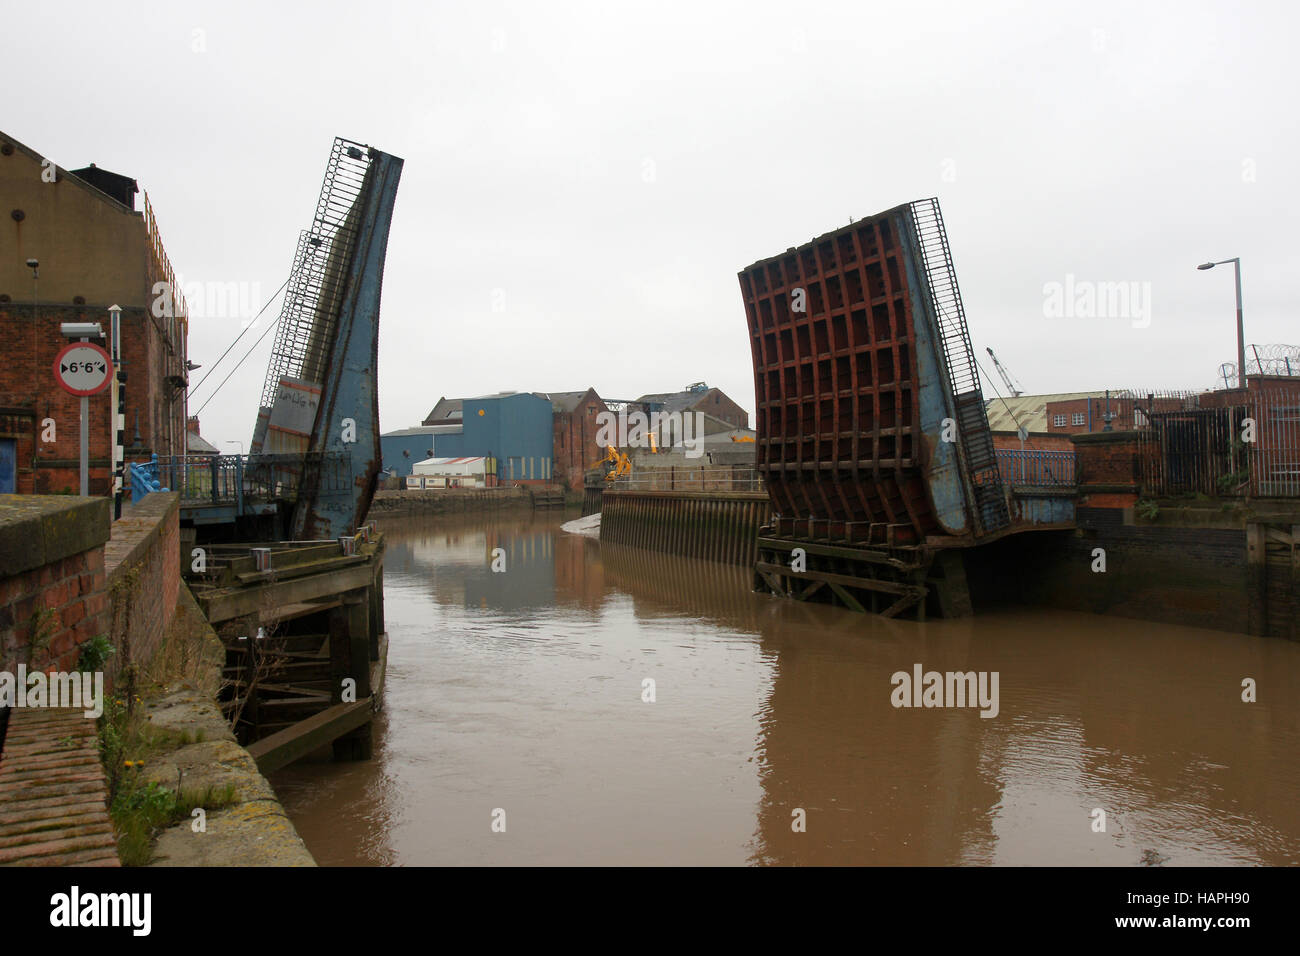 scott street bridge over the river Hull, Stock Photo